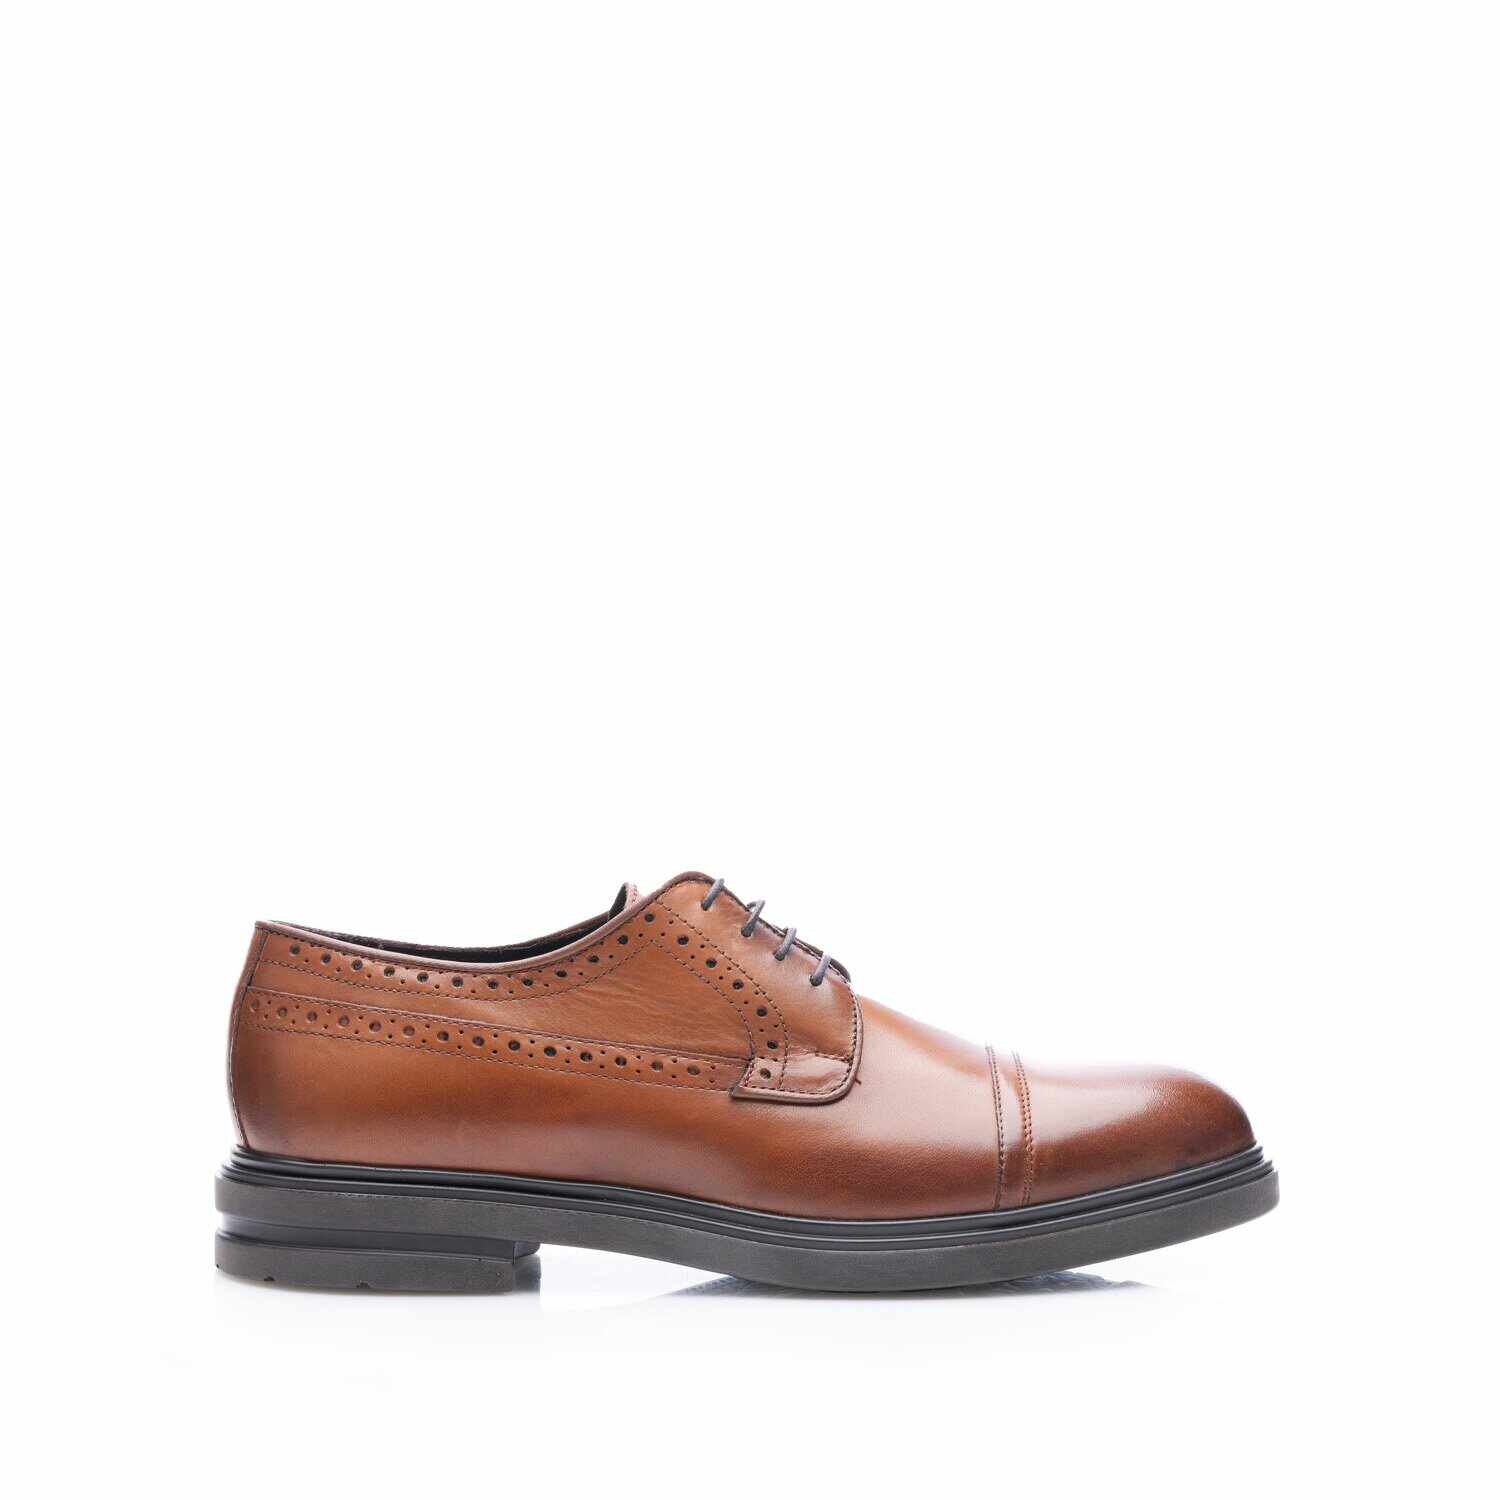 Pantofi casual barbati din piele naturala Leofex - Mostra 930-1 Cognac Box